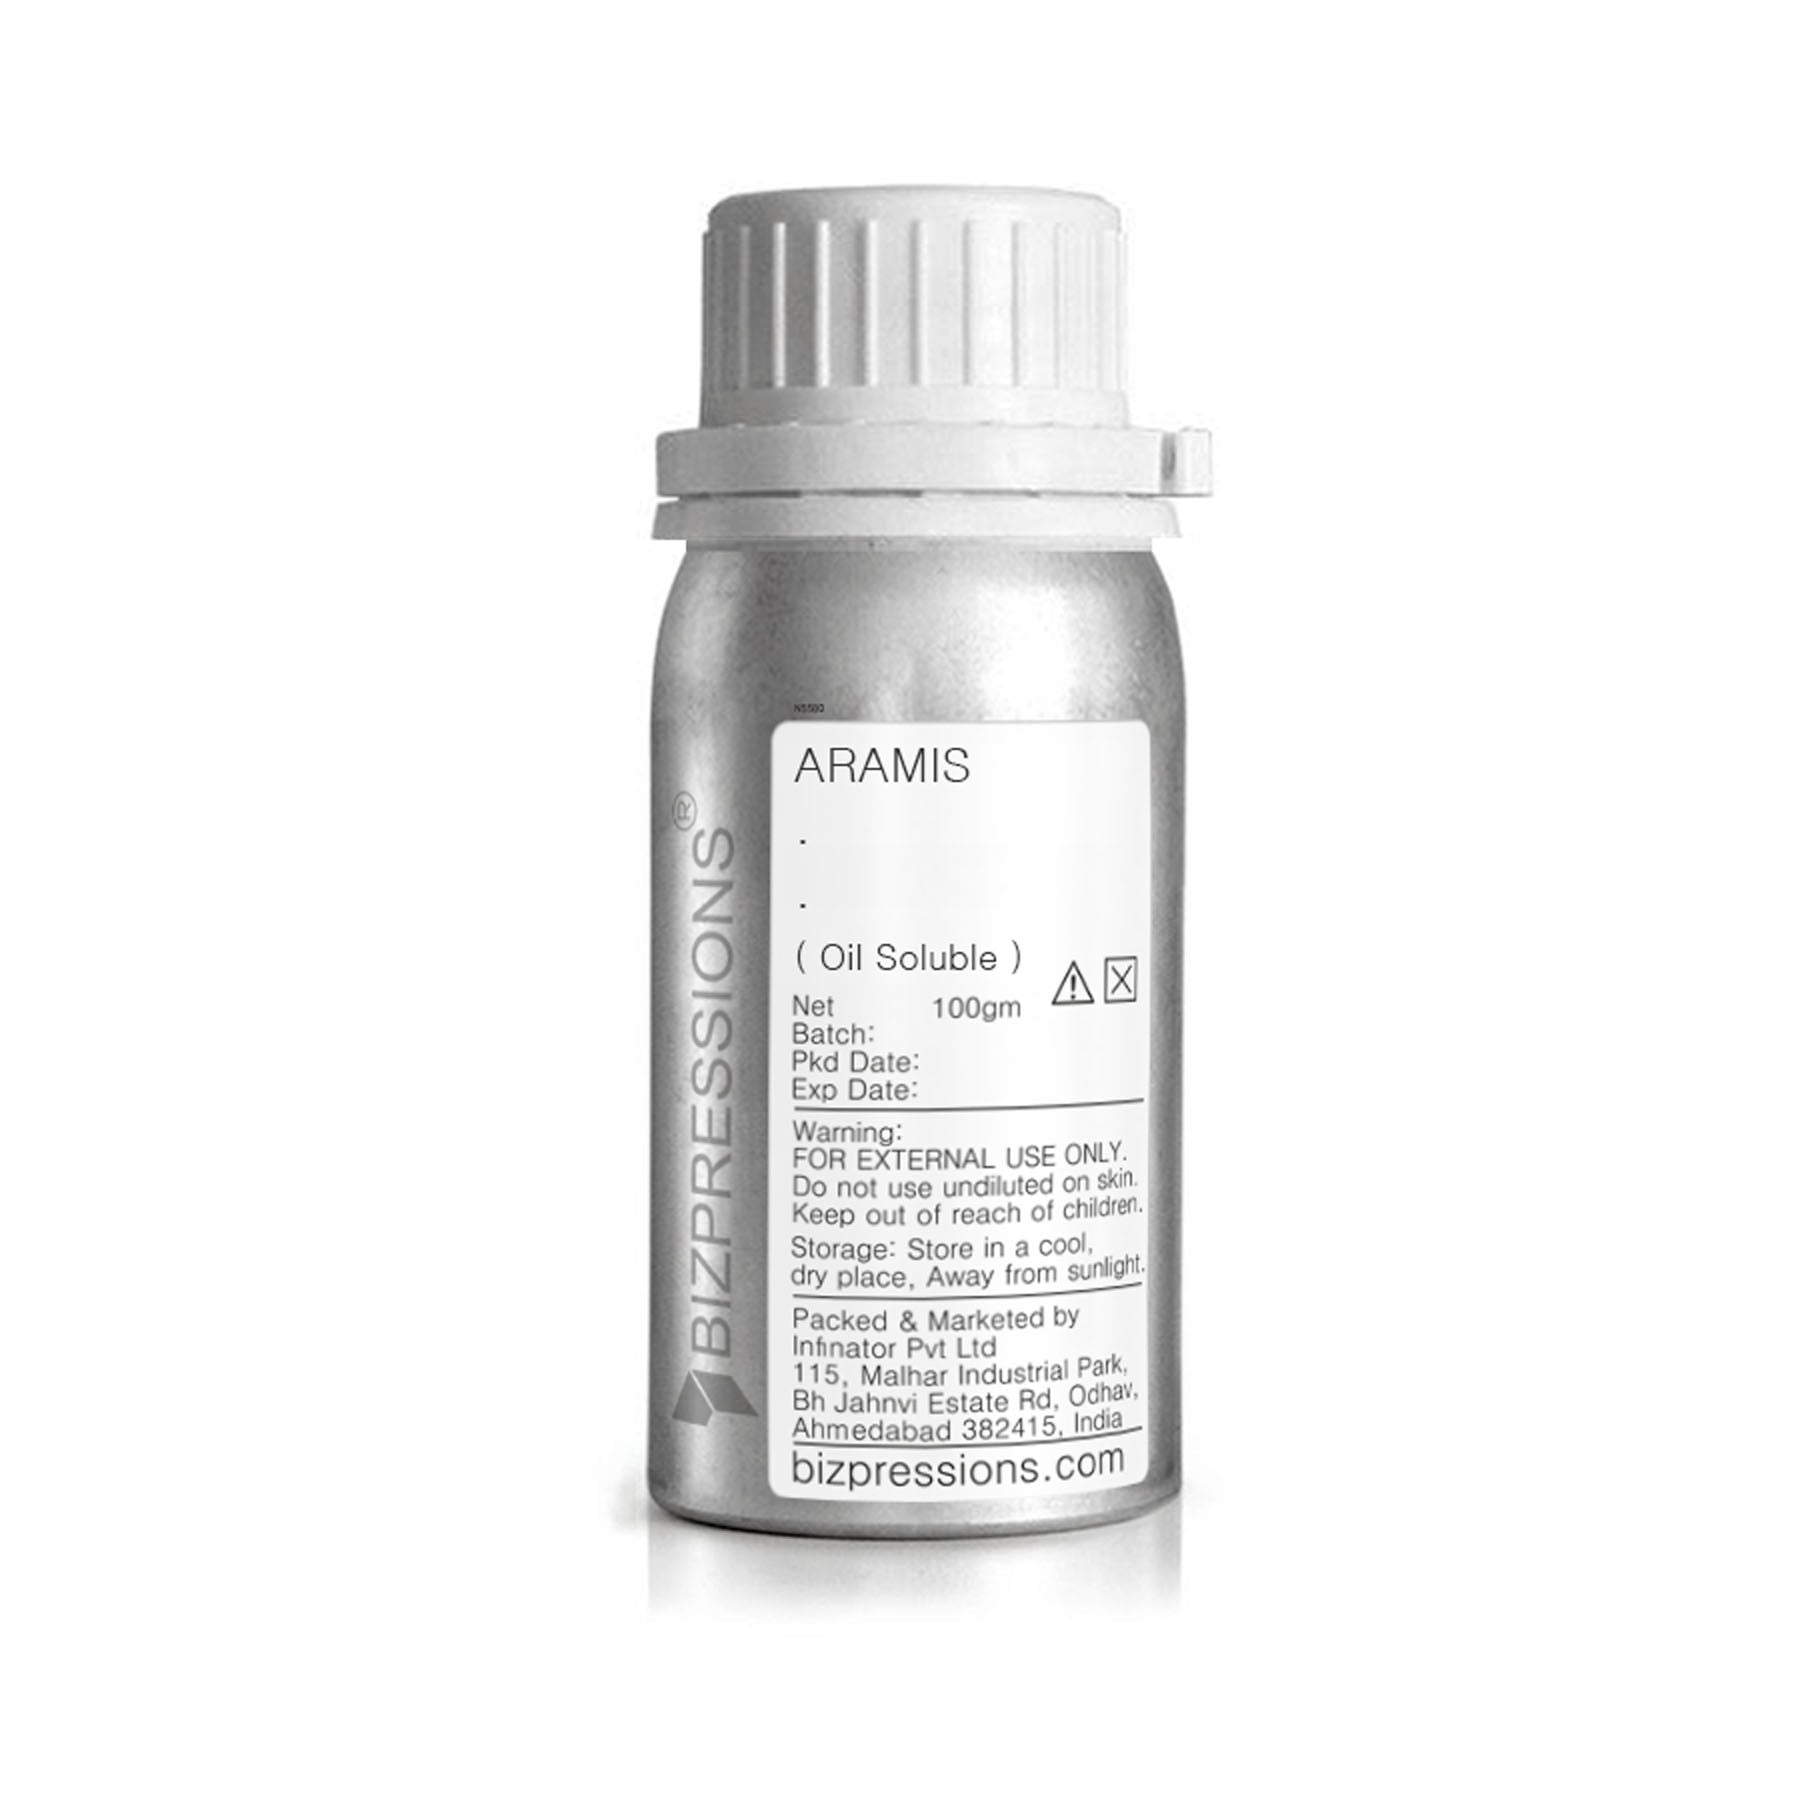 ARAMIS - Fragrance ( Oil Soluble ) - 100 gm